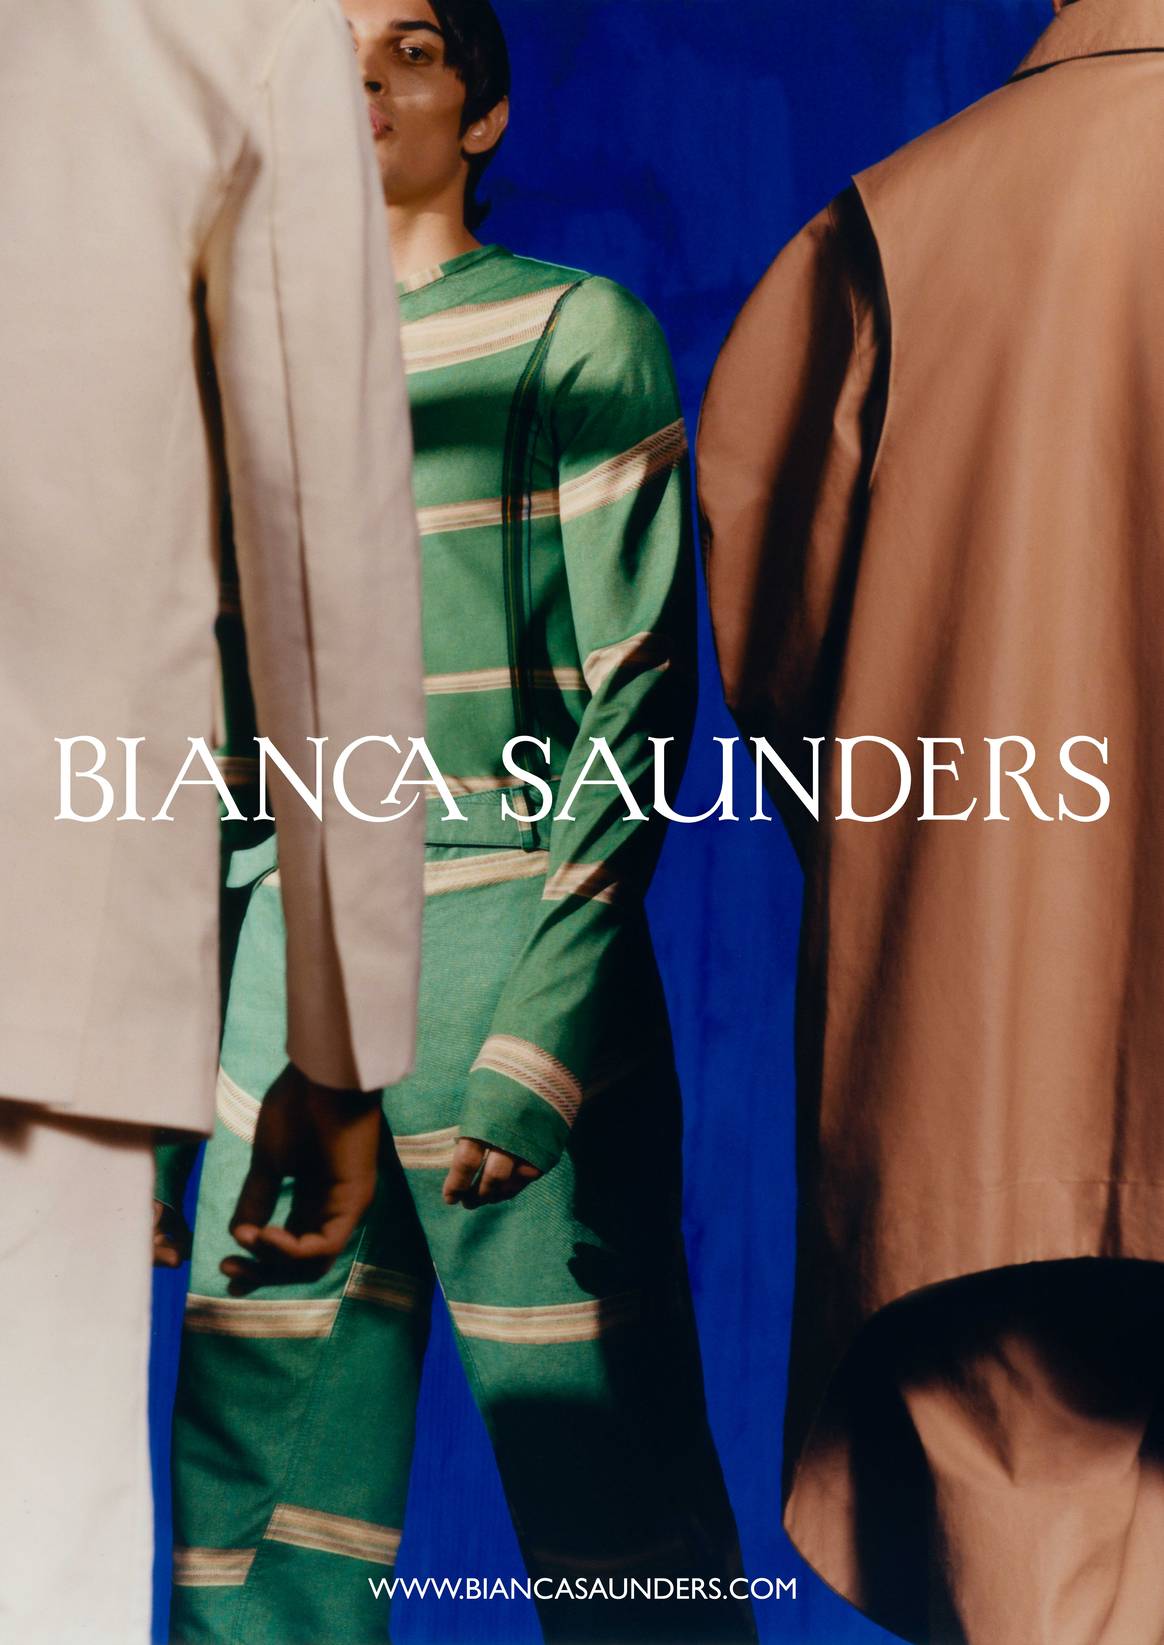 Image: Bianca Saunders